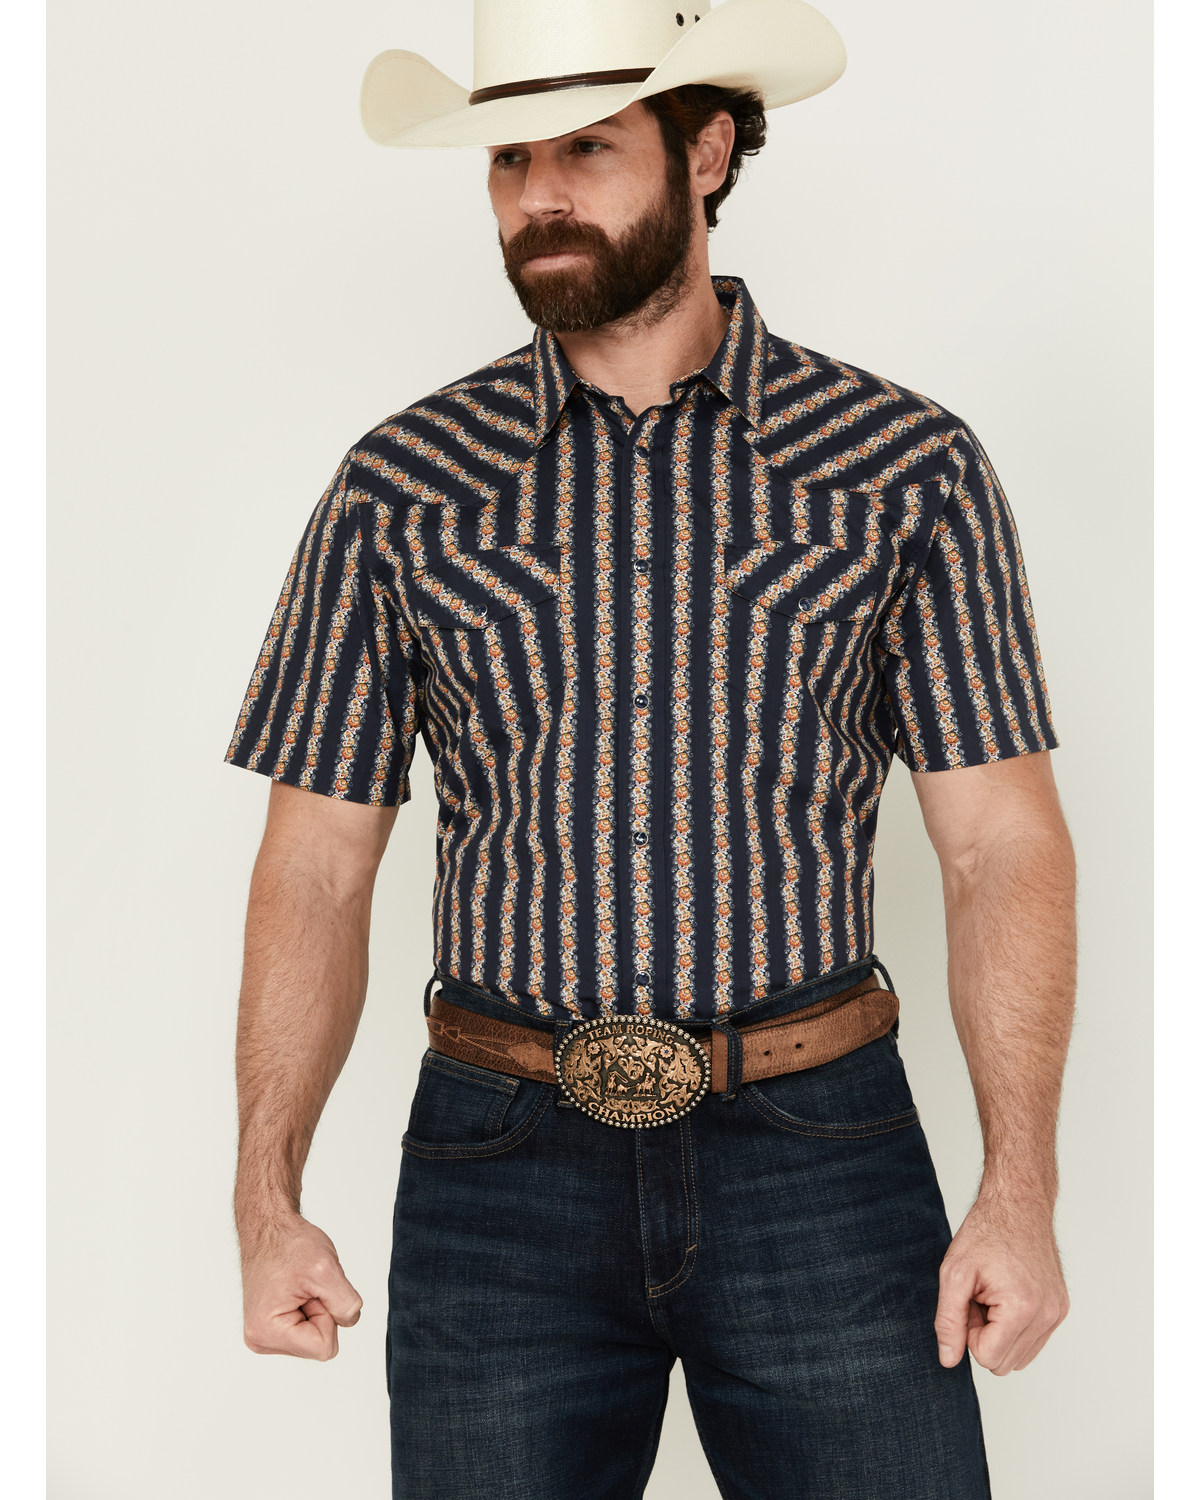 Gibson Men's Belmont Striped Short Sleeve Snap Western Shirt